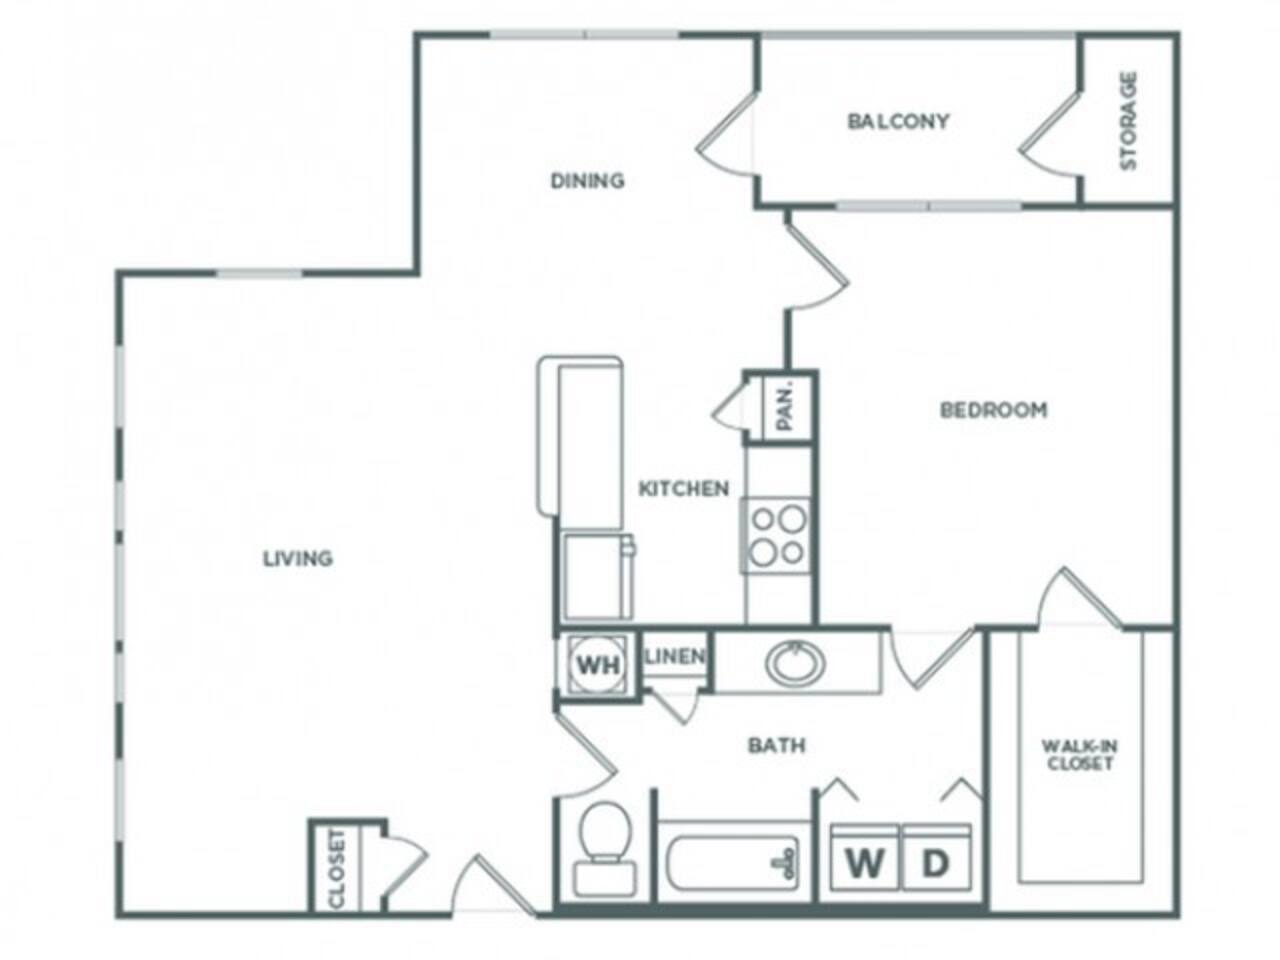 Floorplan diagram for One bedroom One Bath (911 SF), showing 1 bedroom